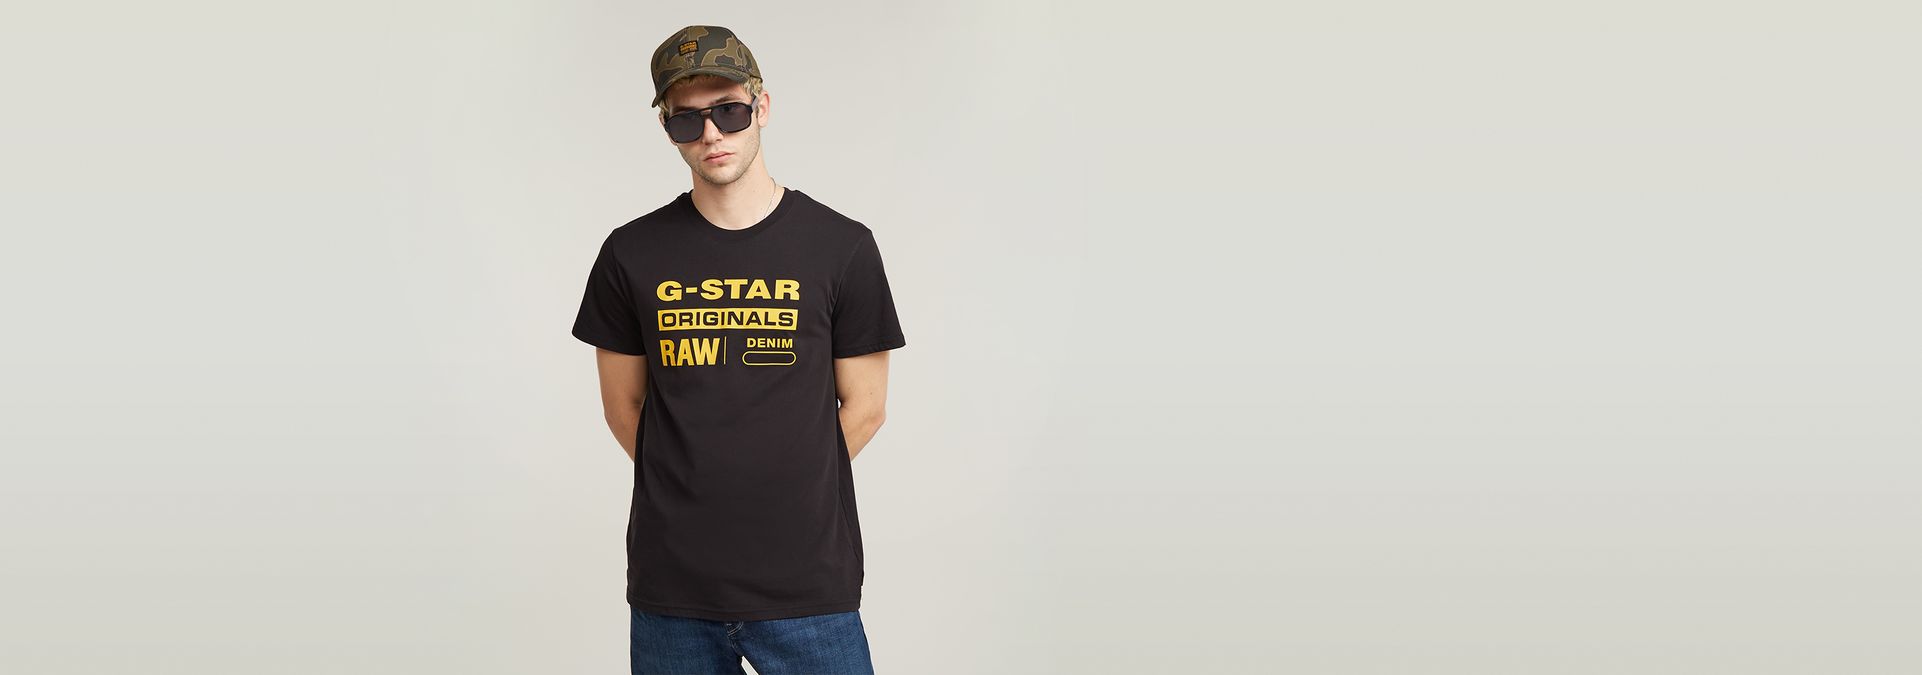 G-Star RAW Men's Originals T-Shirt, Blue | eBay